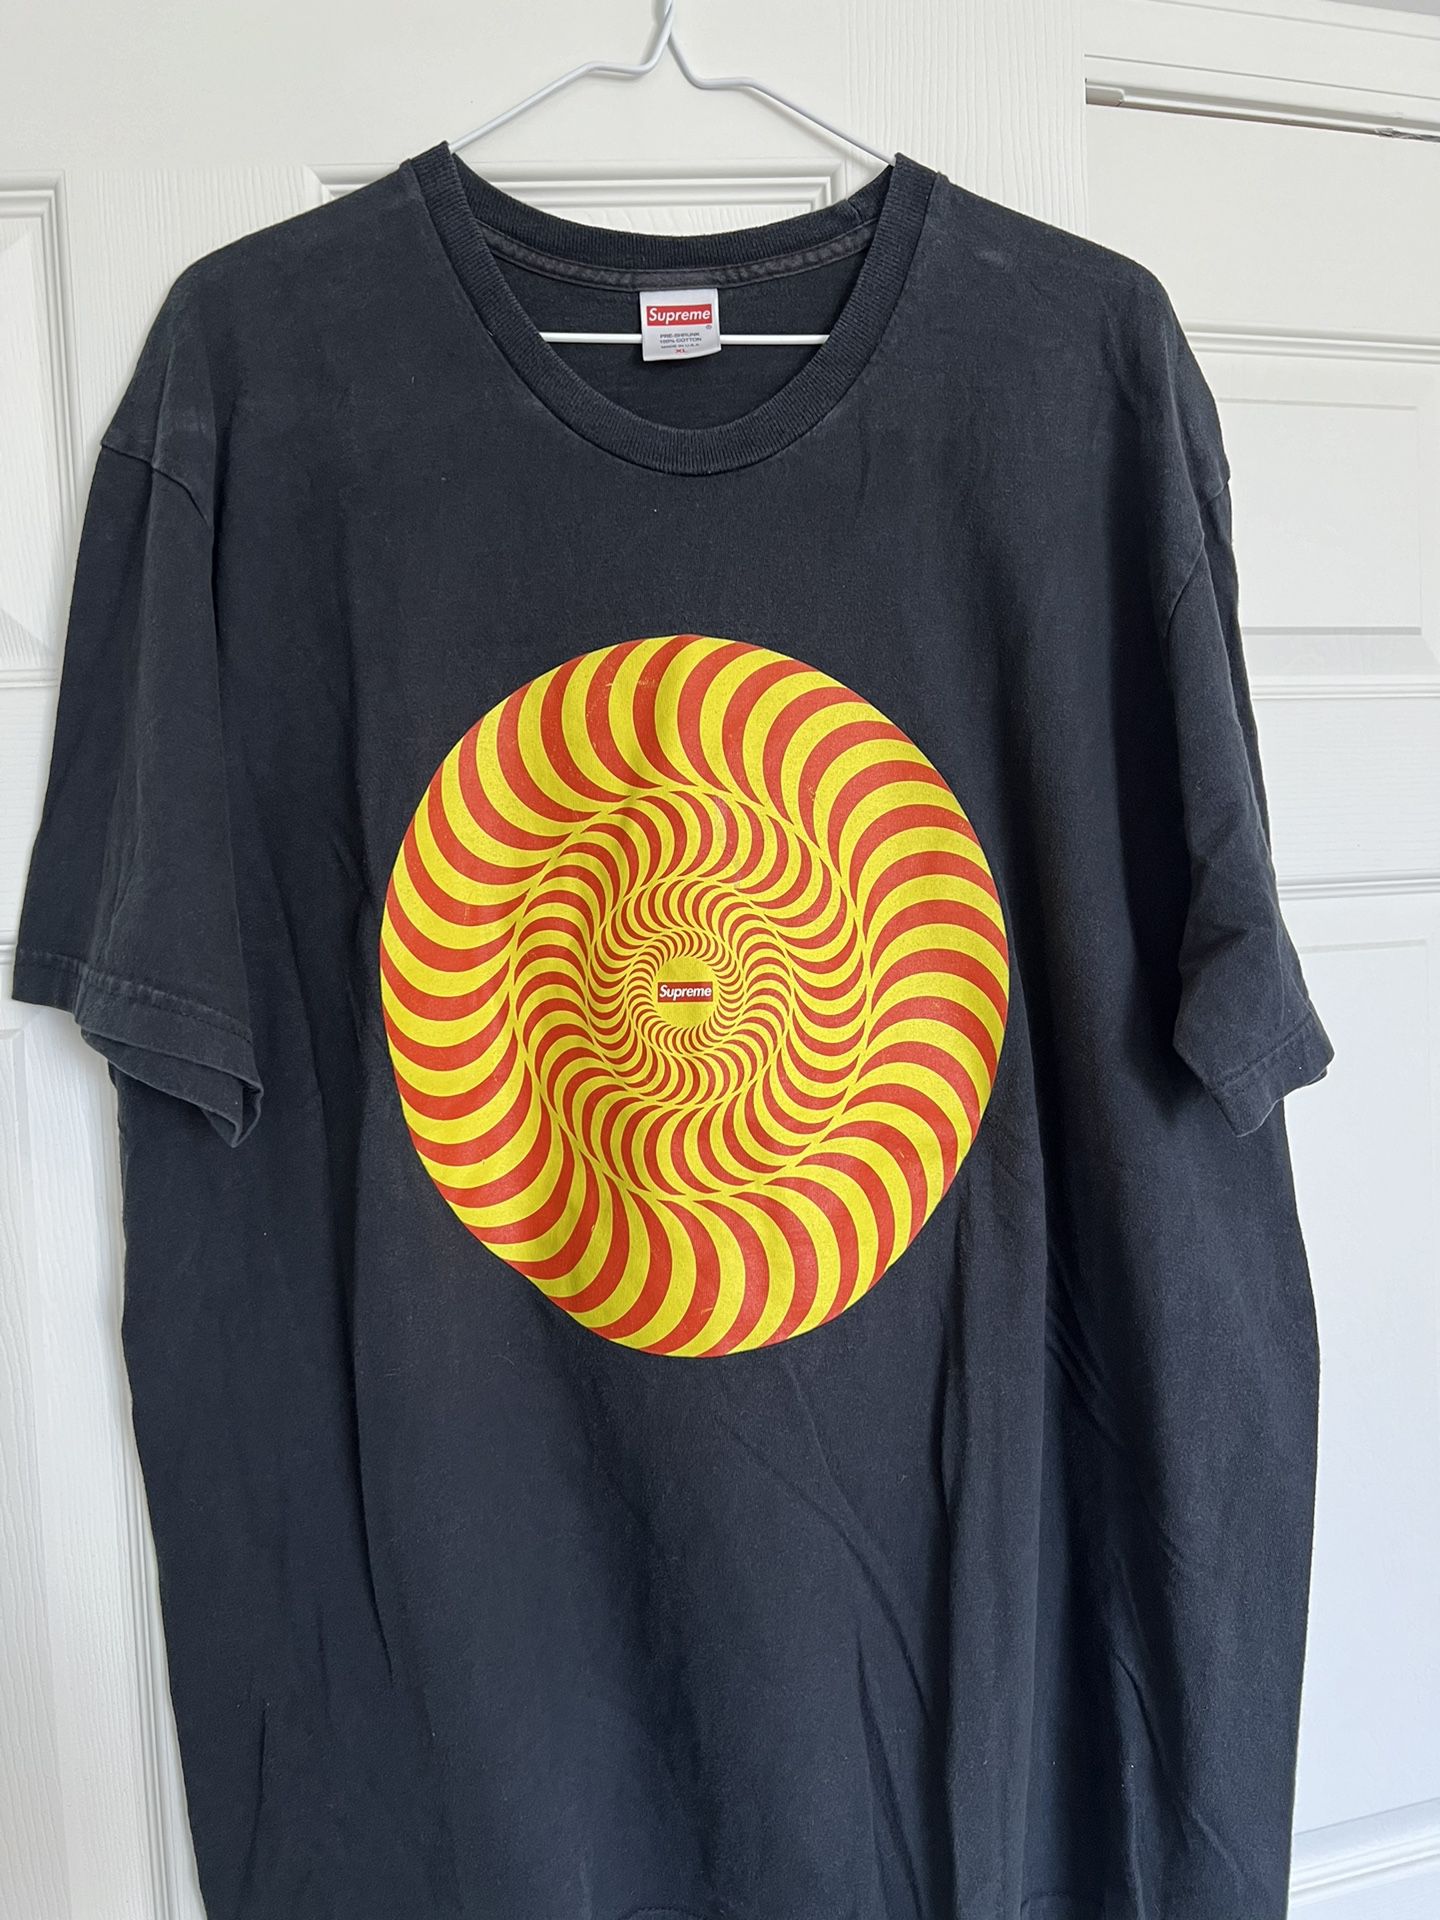 Supreme Spitfire Swirl Shirt XL